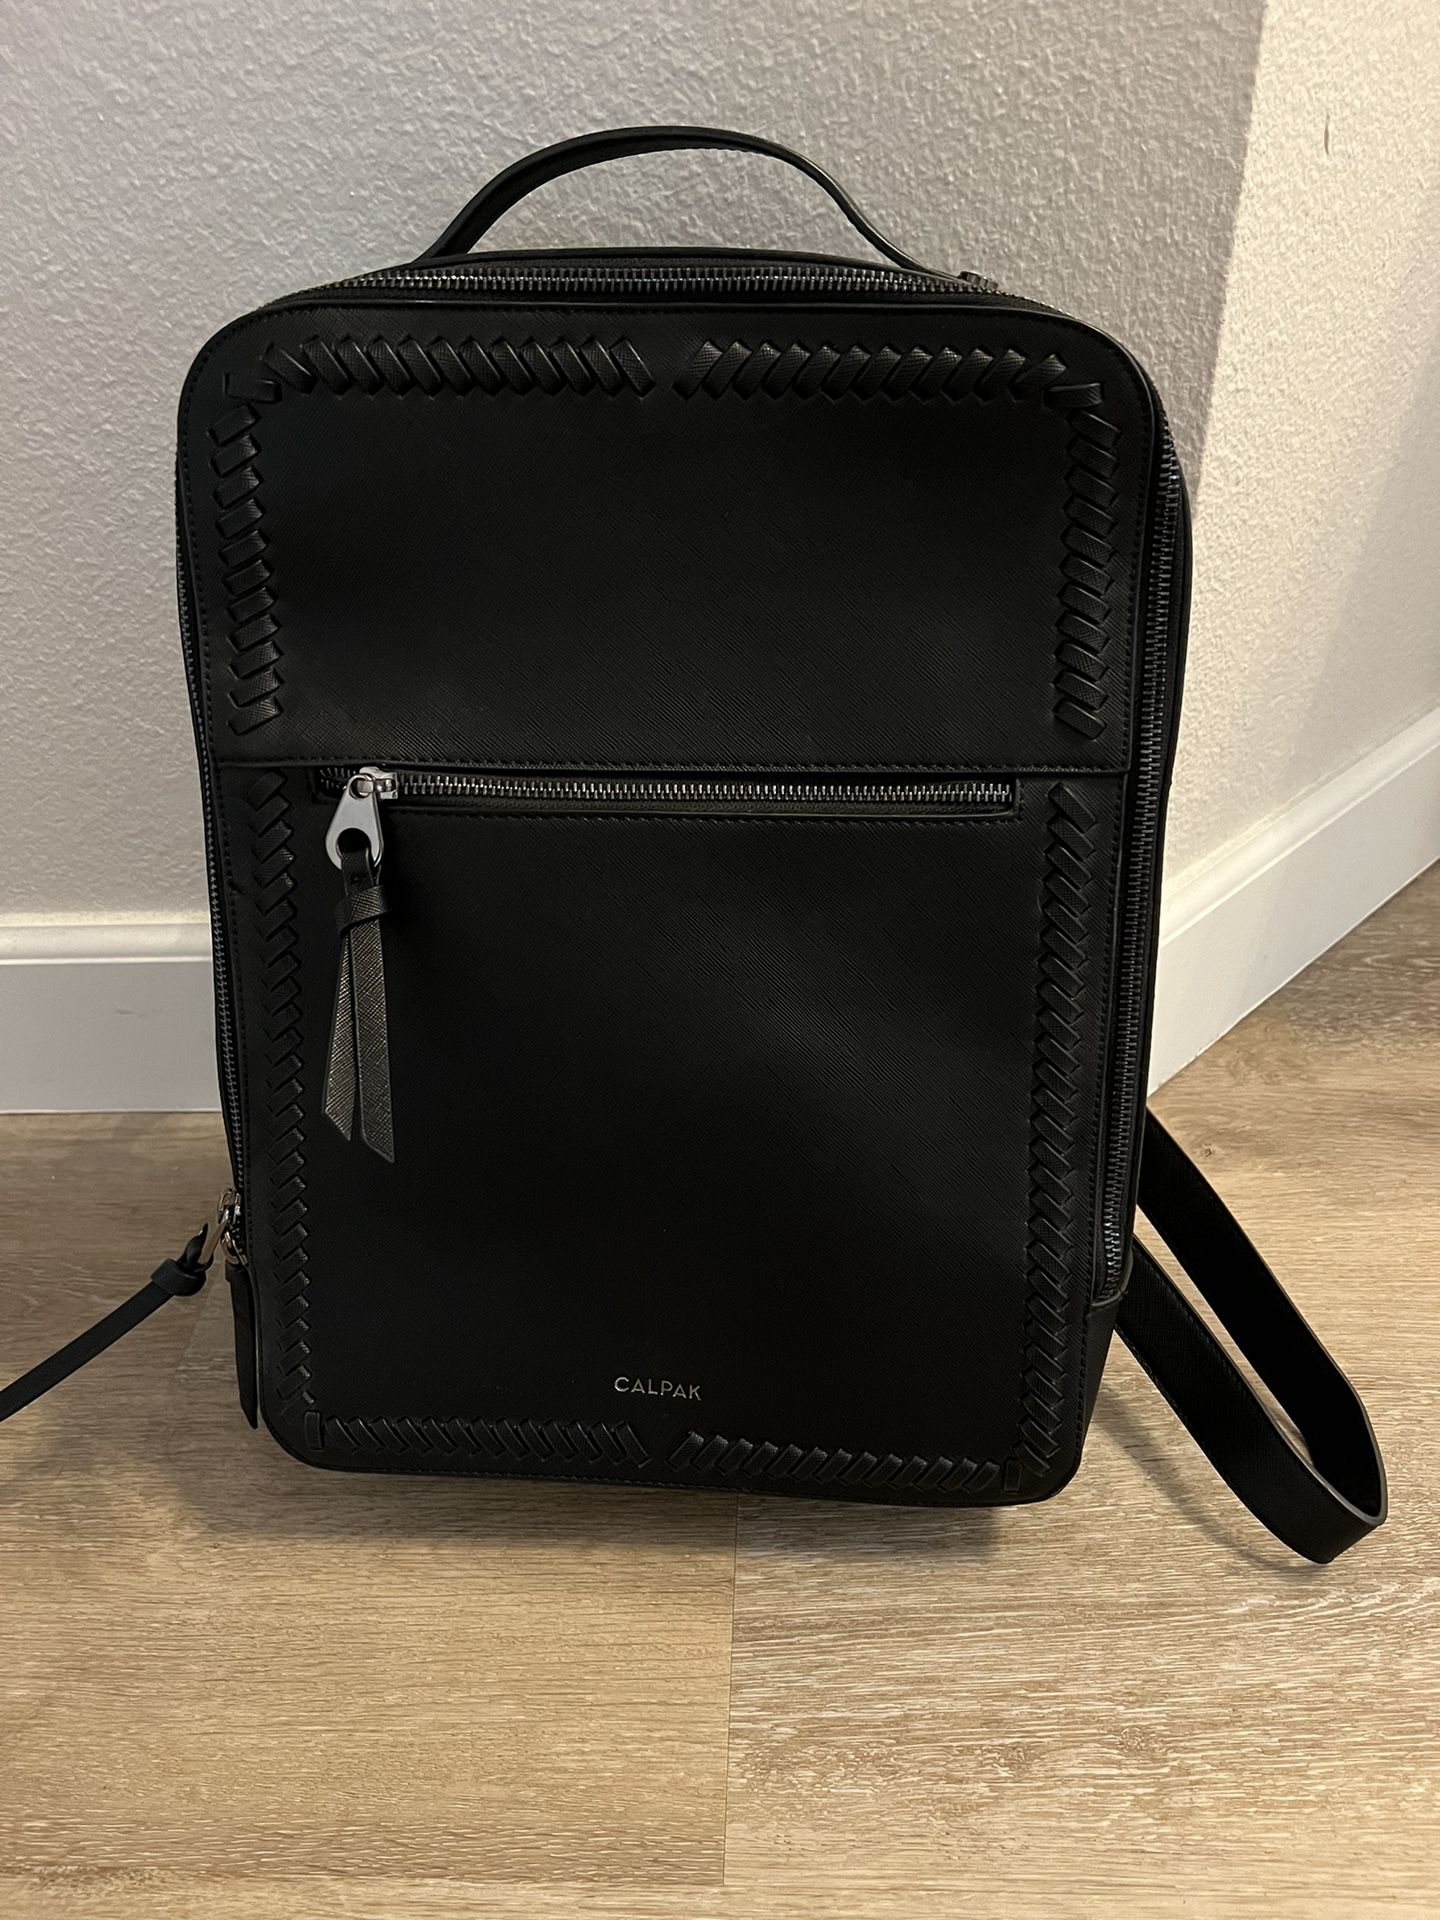 Calpak Kaya 15 inch laptop Backpack